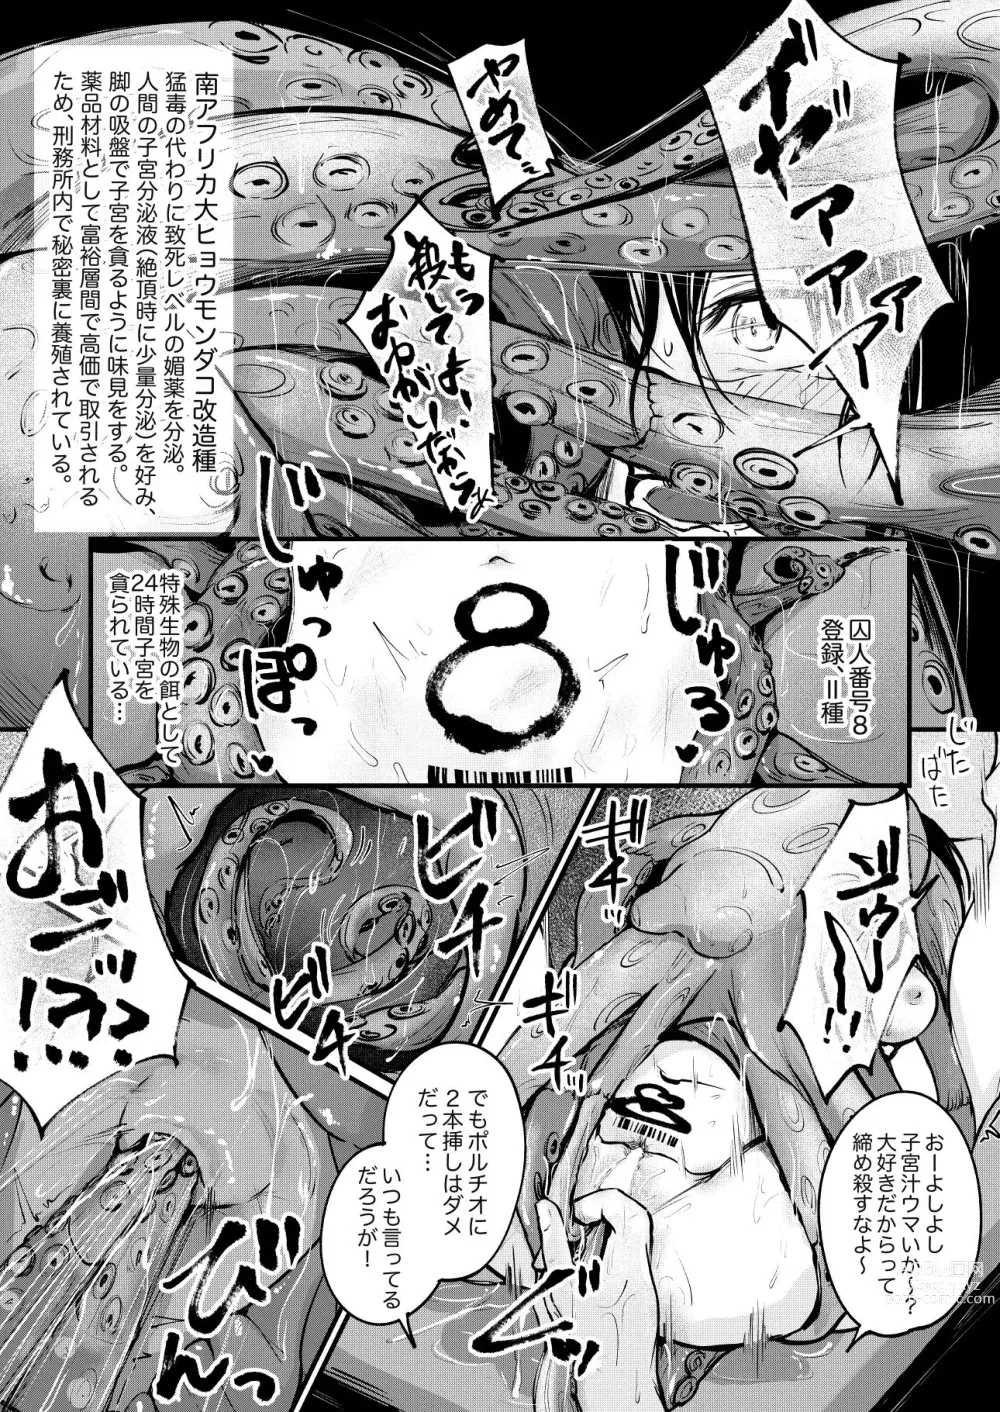 Page 4 of imageset ●PIXIV● Mokataki